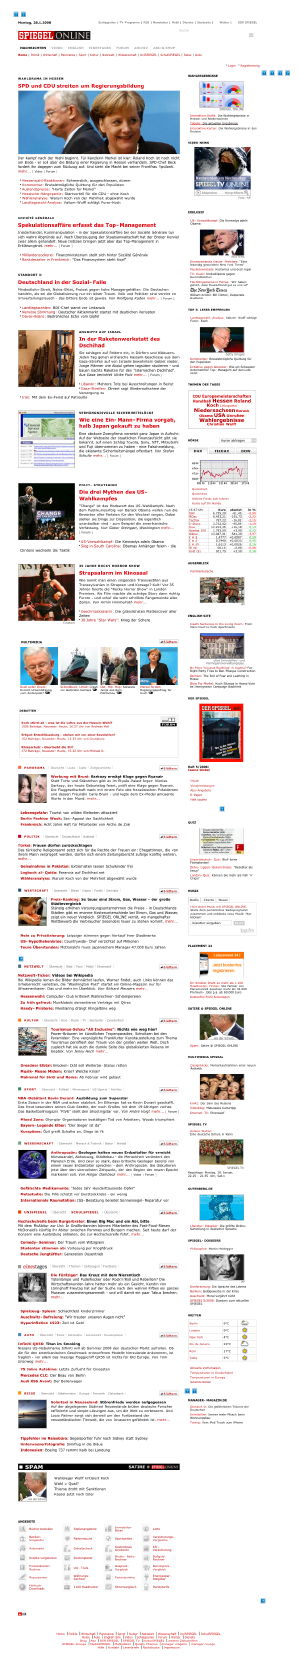 Spiegel Online the way it normally looks